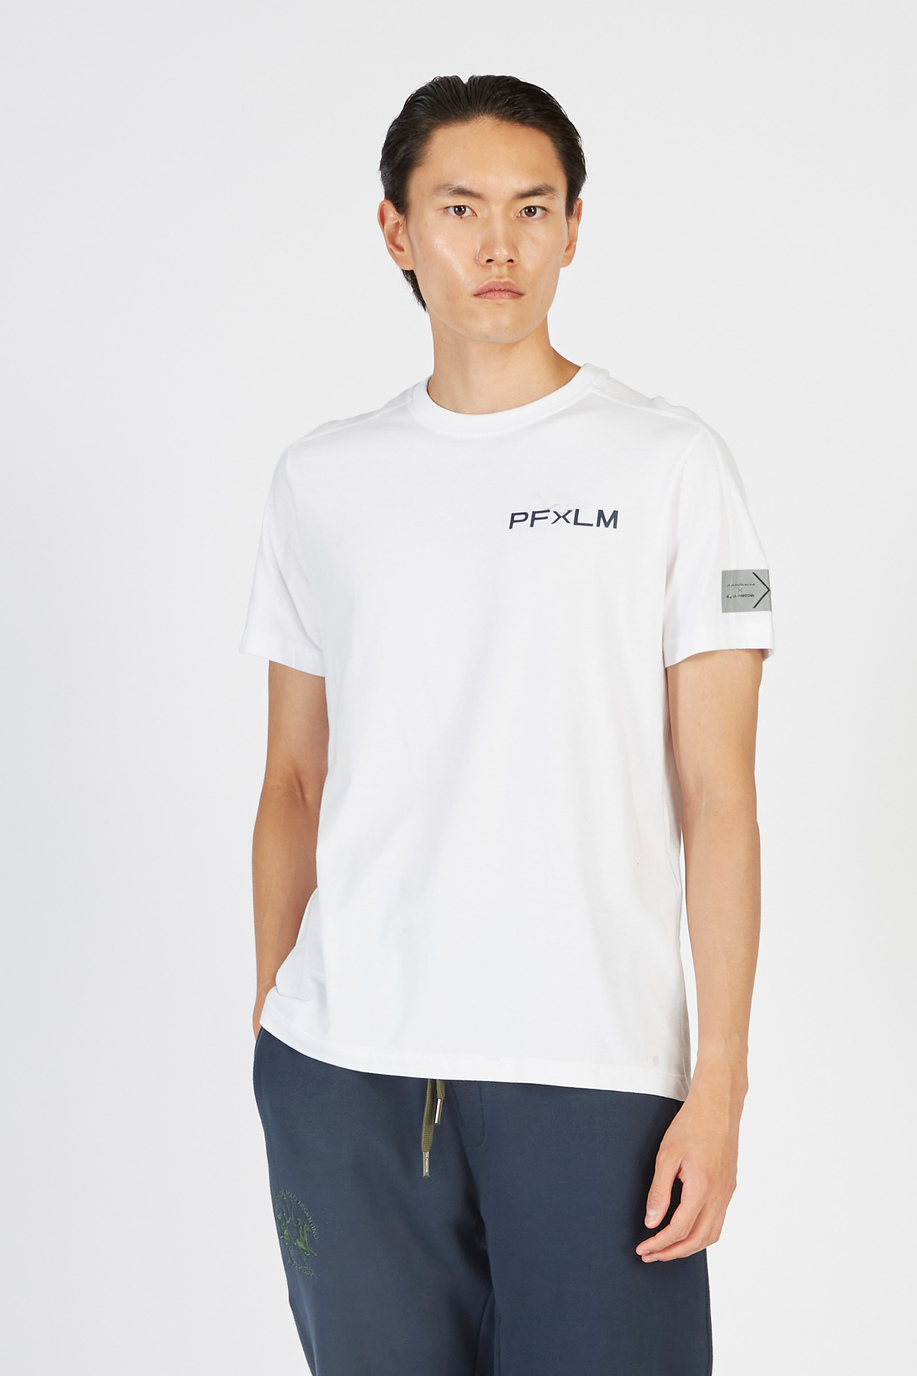 Pininfarina men’s regular fit cotton t-shirt - Pininfarina X La Martina | La Martina - Official Online Shop